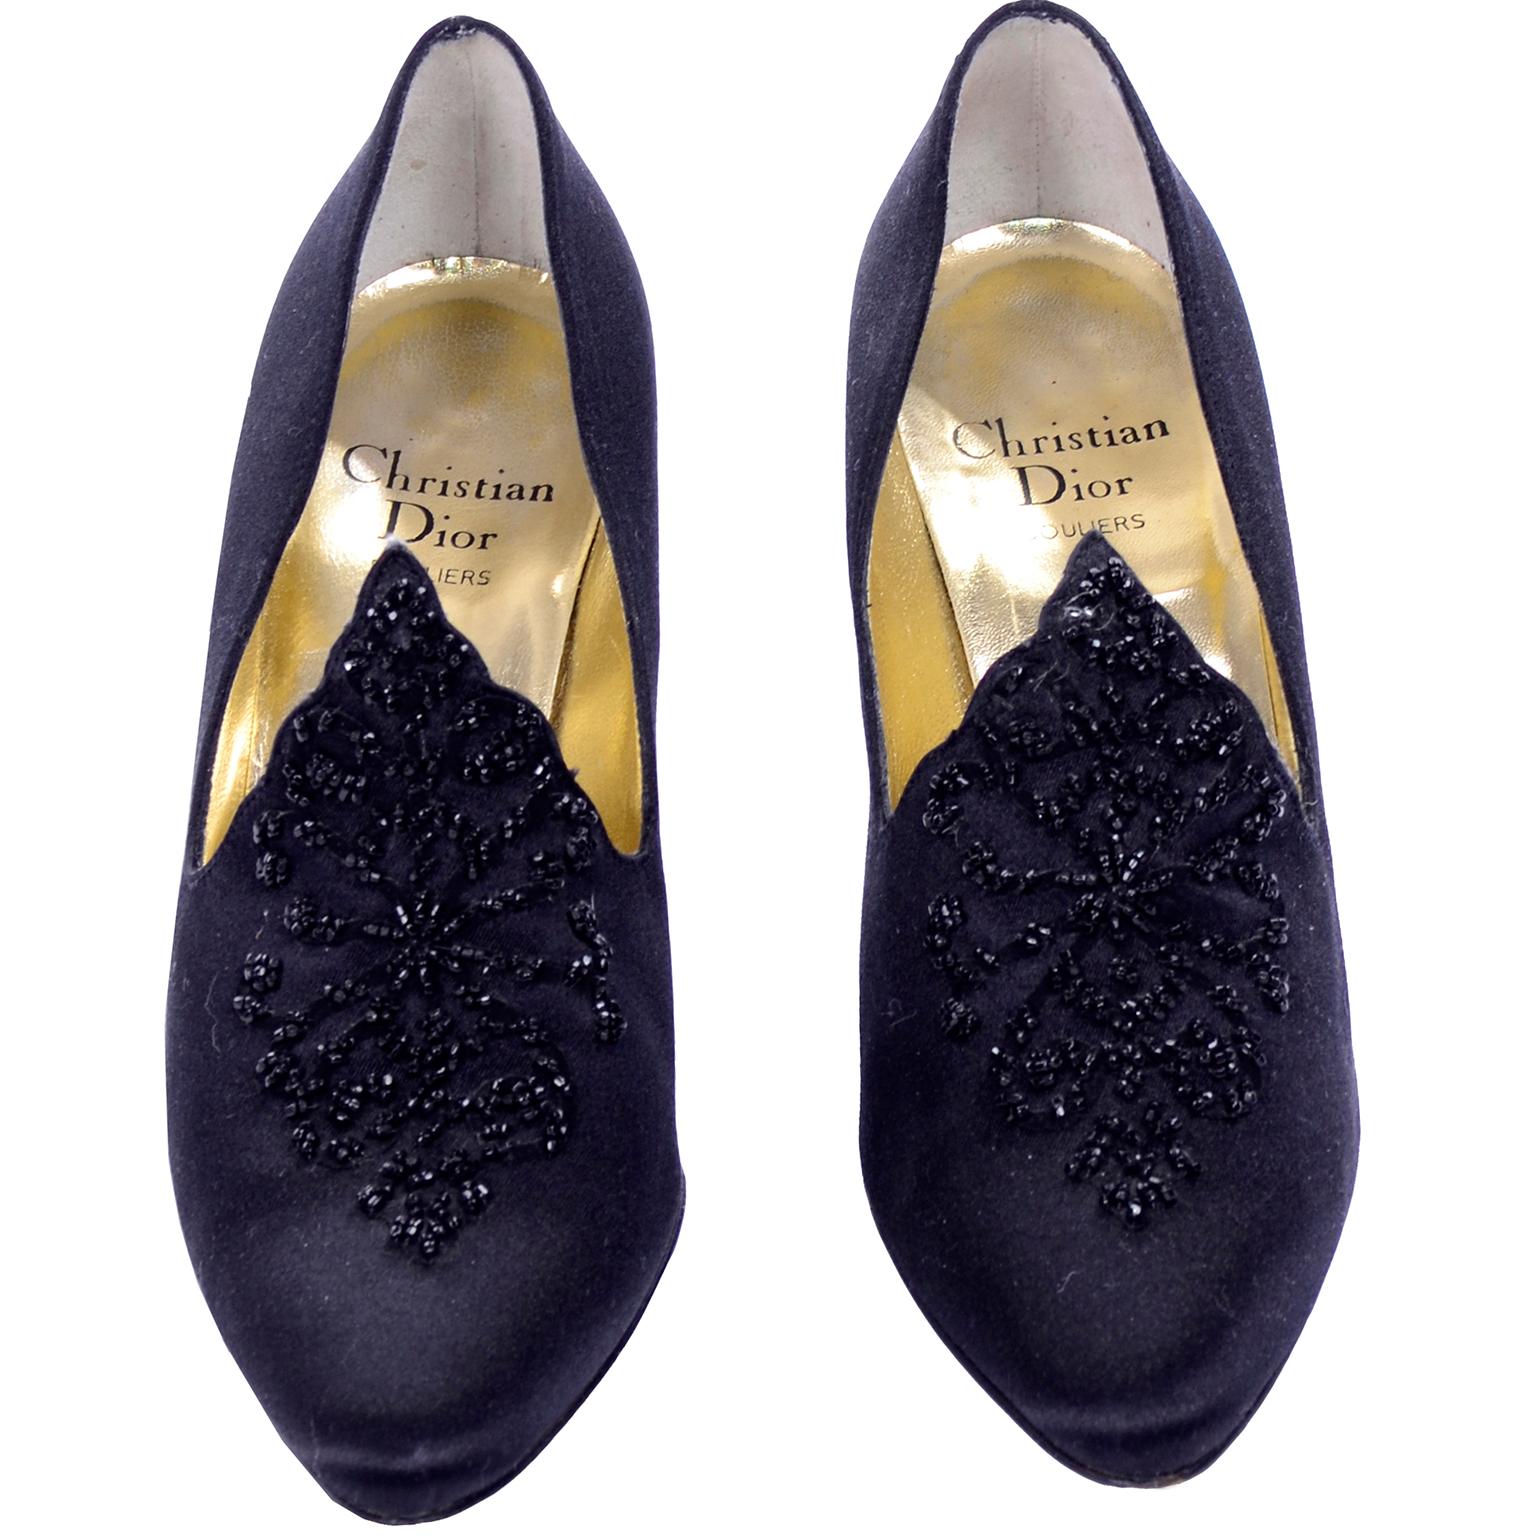 Christian Dior Souliers Vintage Black Satin Beaded Shoes Size 8 W/ Bag & Box 4